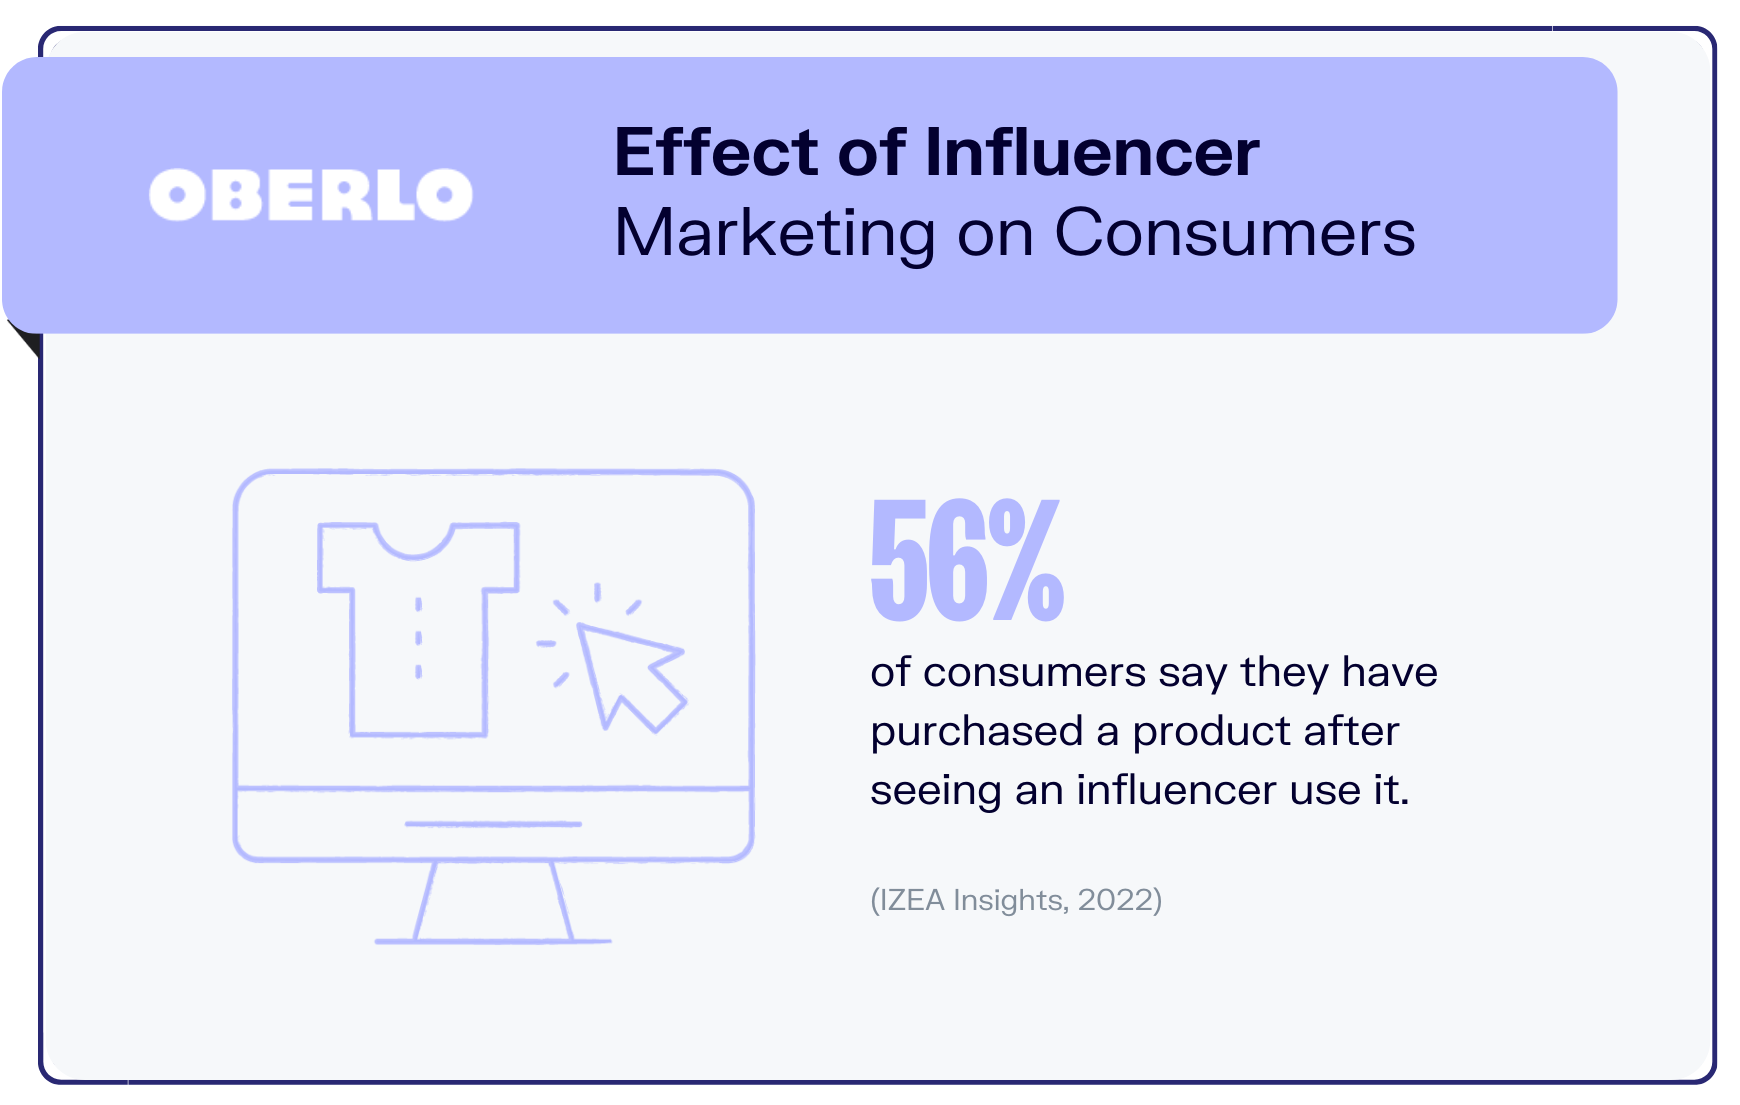 influencer marketing statistics graphic8